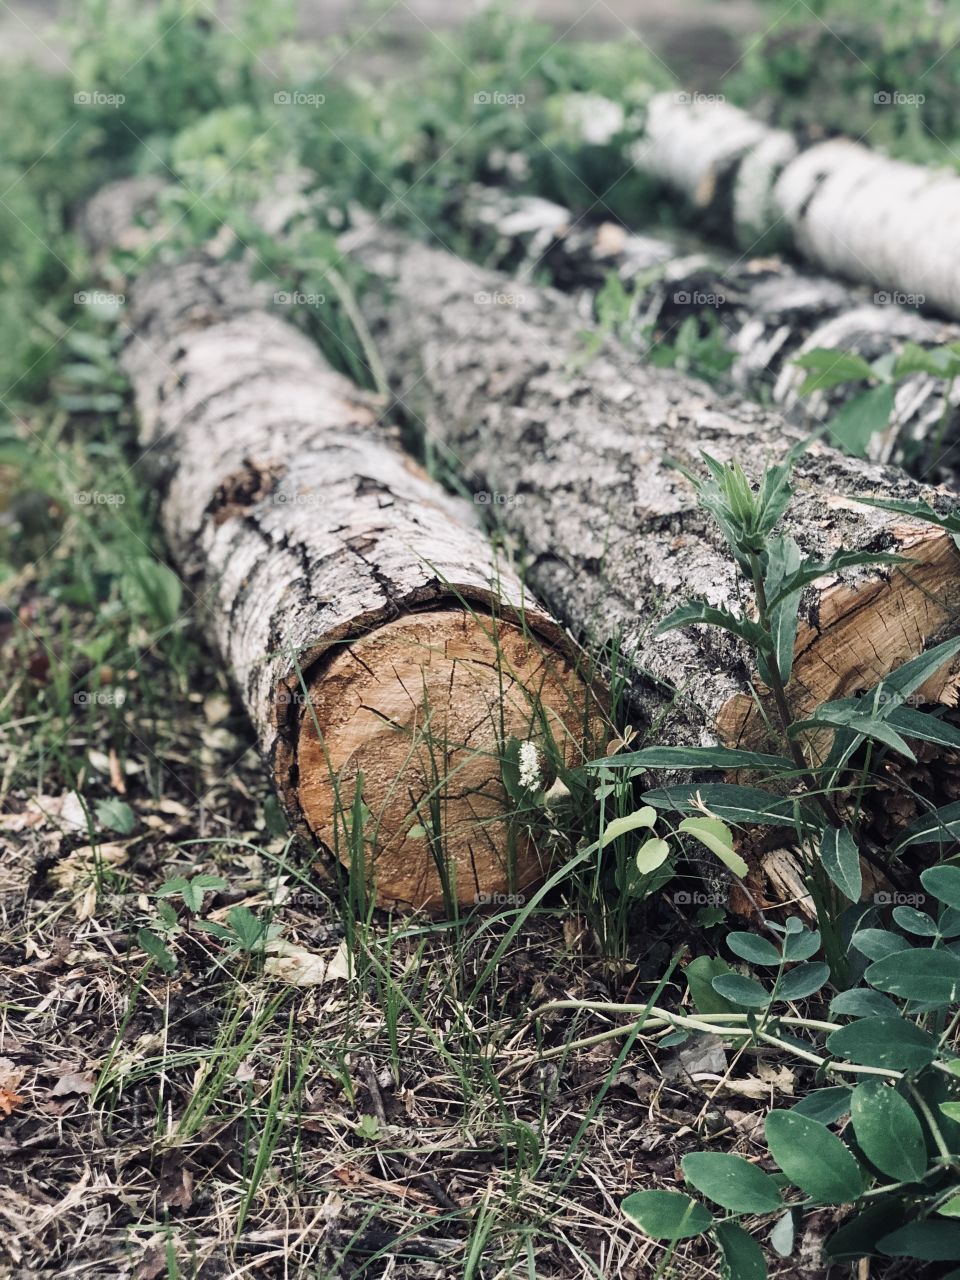 Aged wood log #Nature Lover 